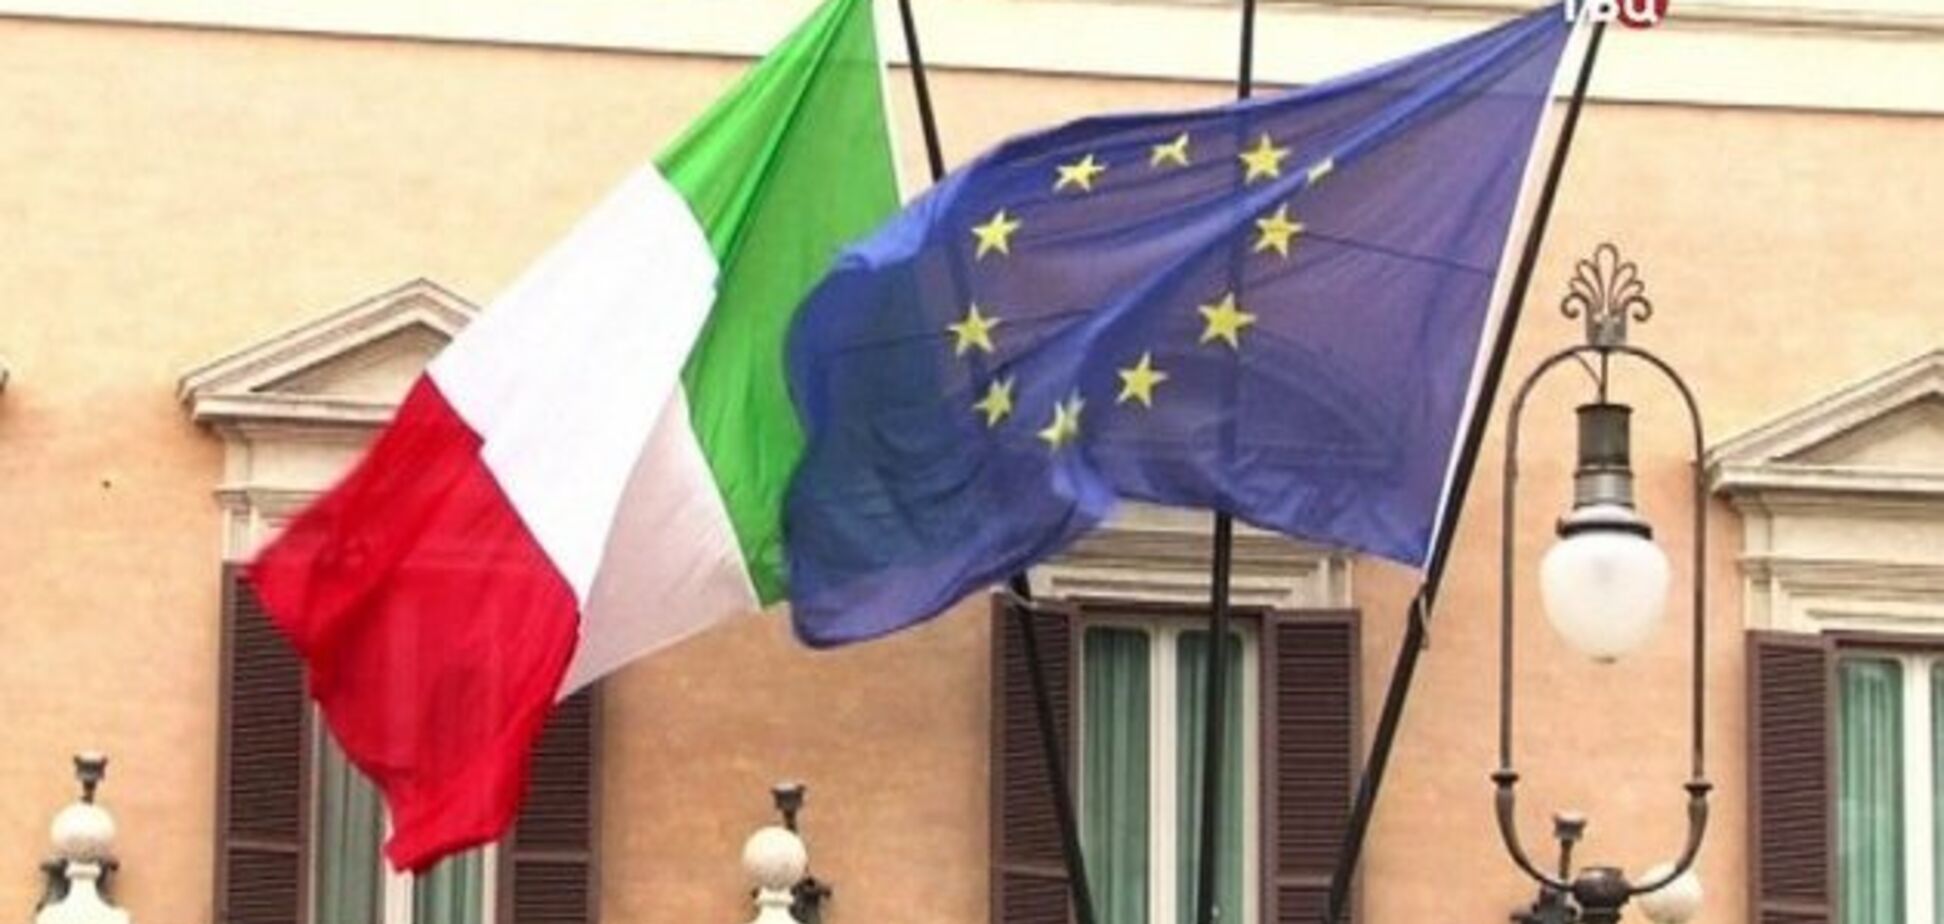 Беспрецедентное противостояние: Италия пошла против ЕС, ей грозят санкции 